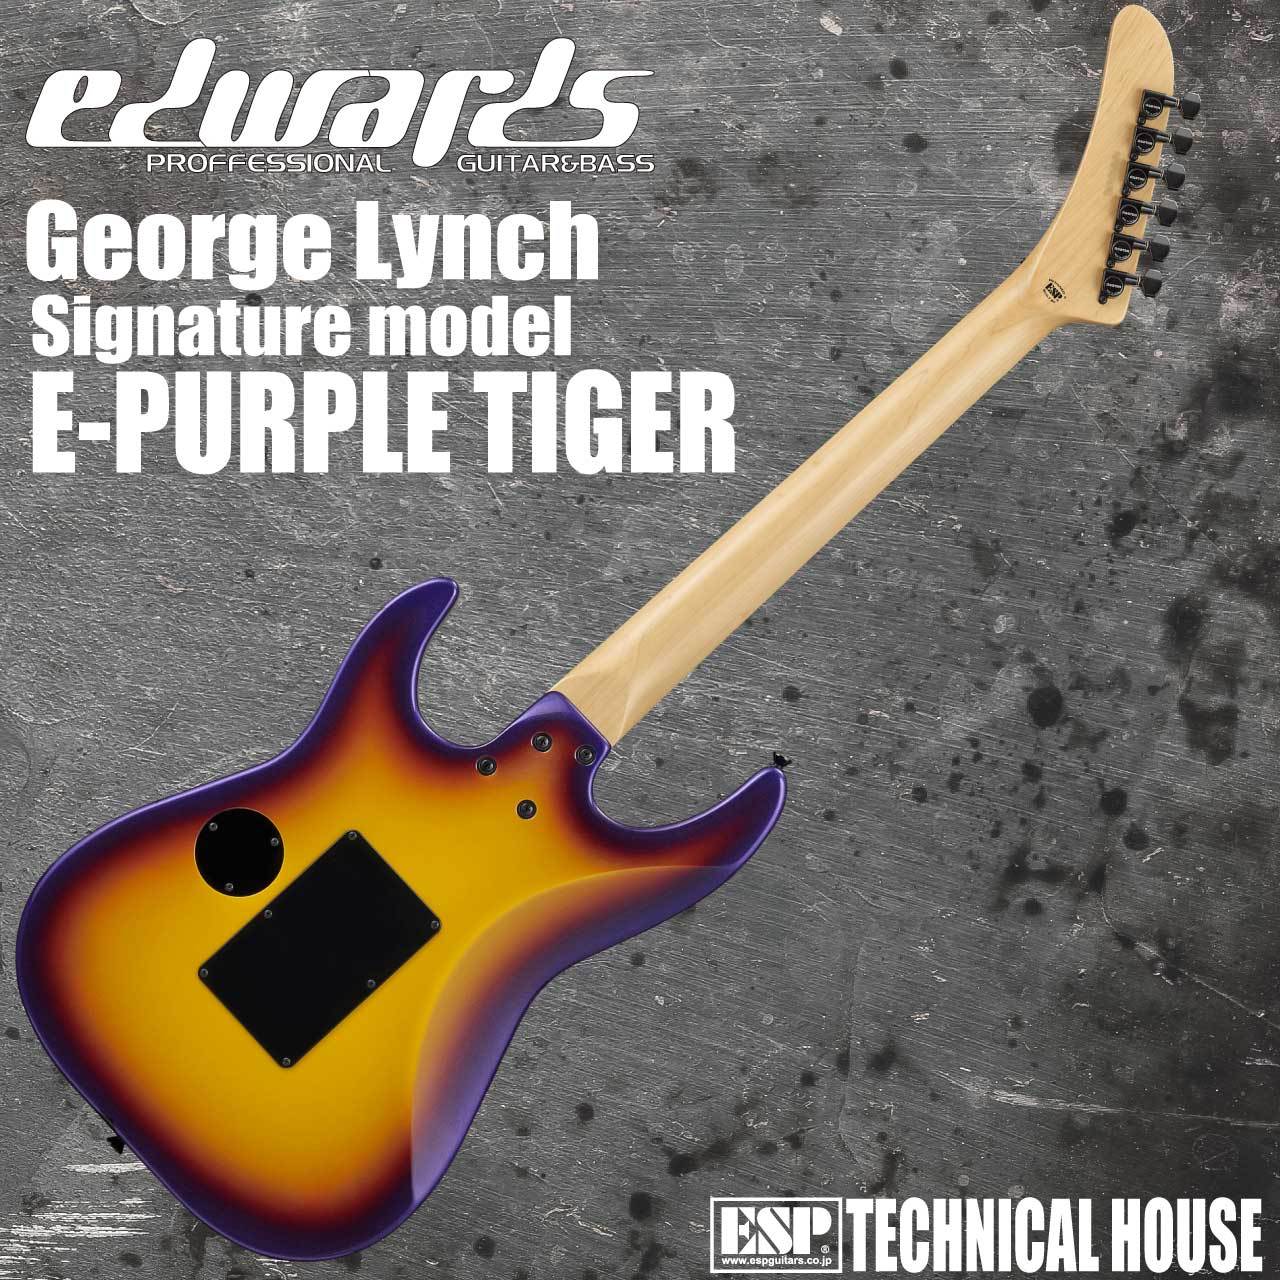 ESP puple tiger ジョージリンチ - 楽器、器材